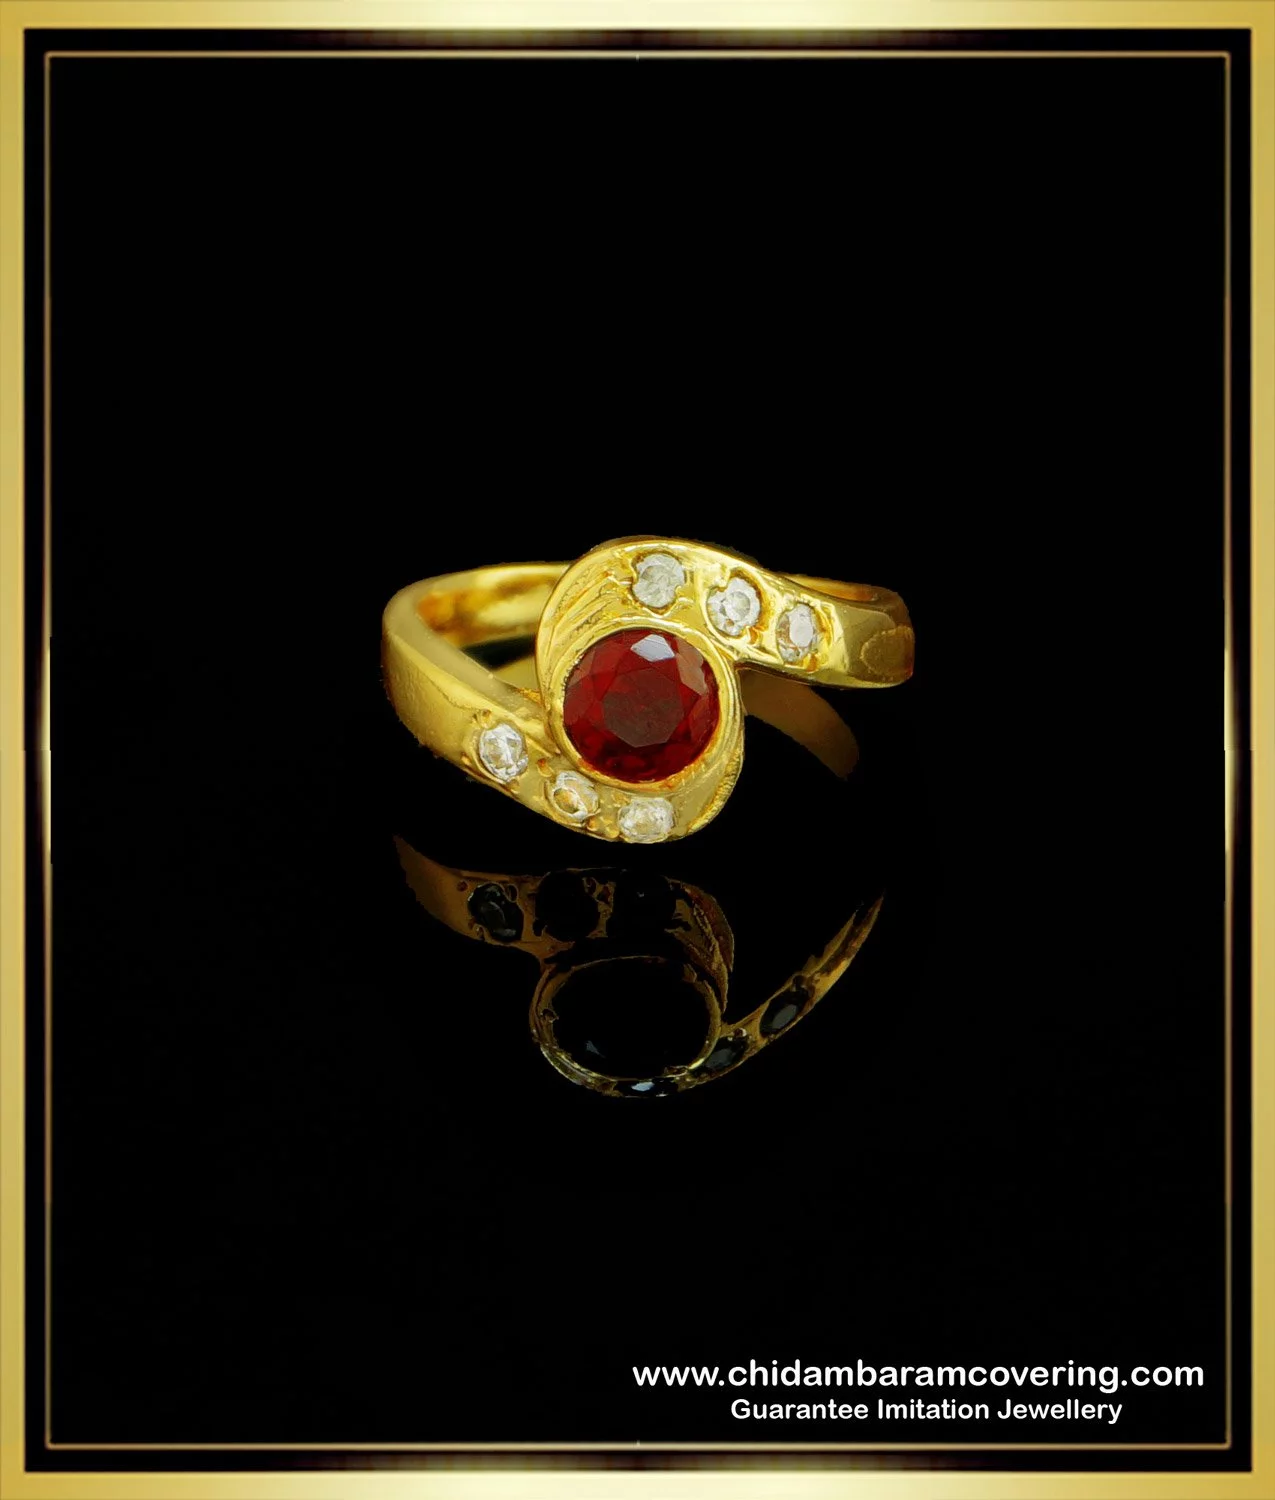 Buy One Gram Gold Wedding Round Shape Adjustable Ladies Finger Ring for  Wedding